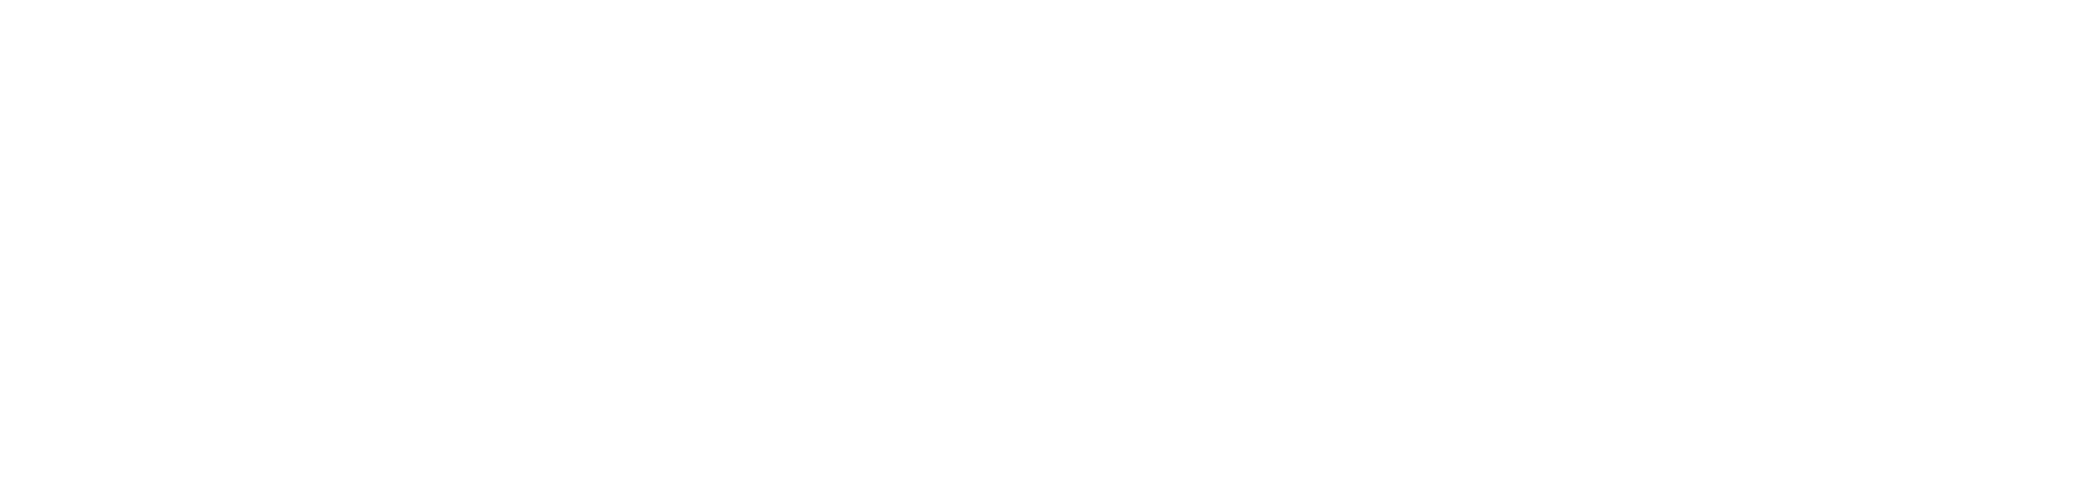 WhatsApp e Messenger para equipes